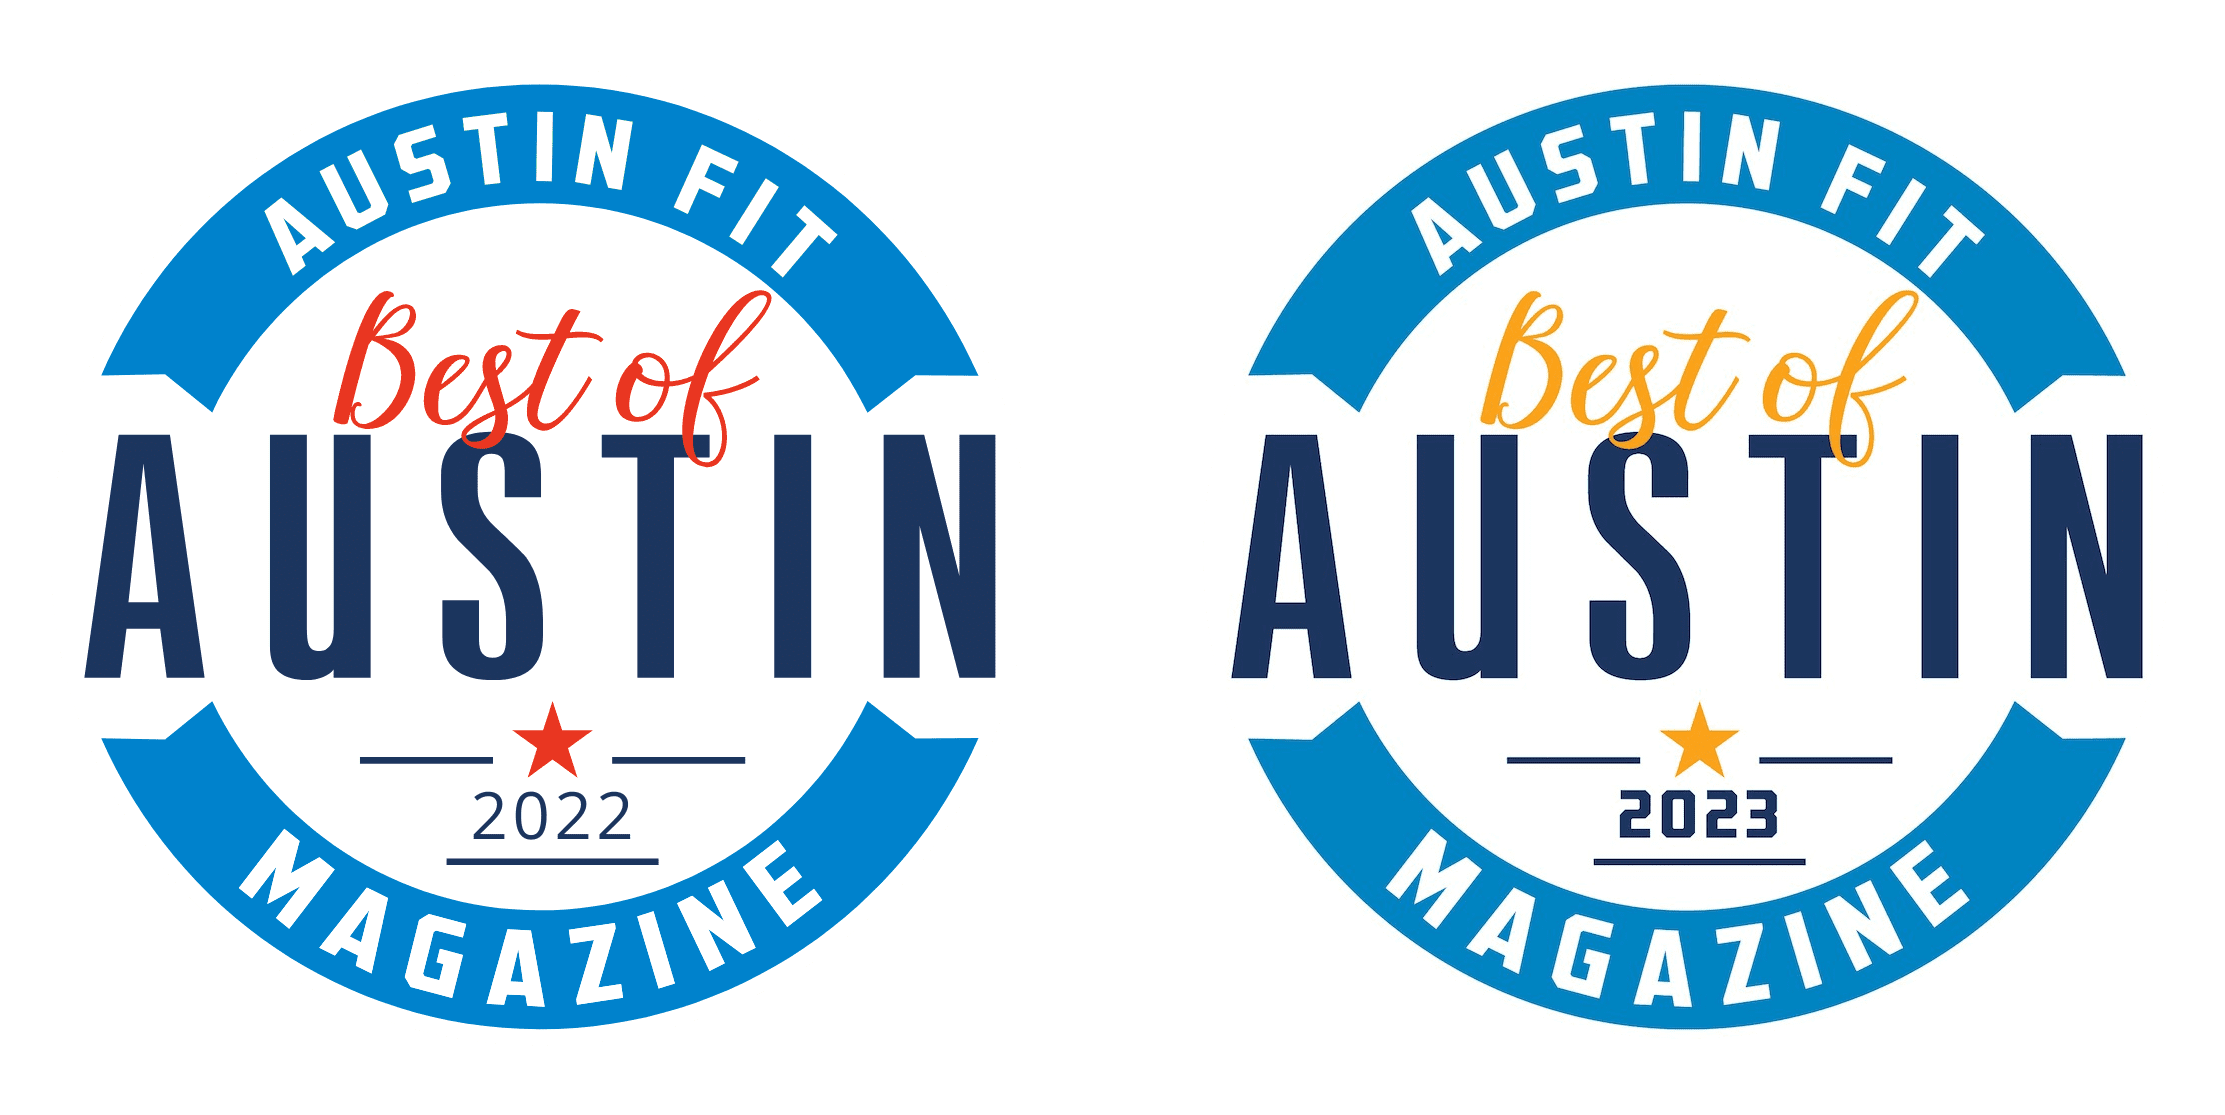 Austin Fit Magazine Best of Austin 2022 and 2023 Award Badges